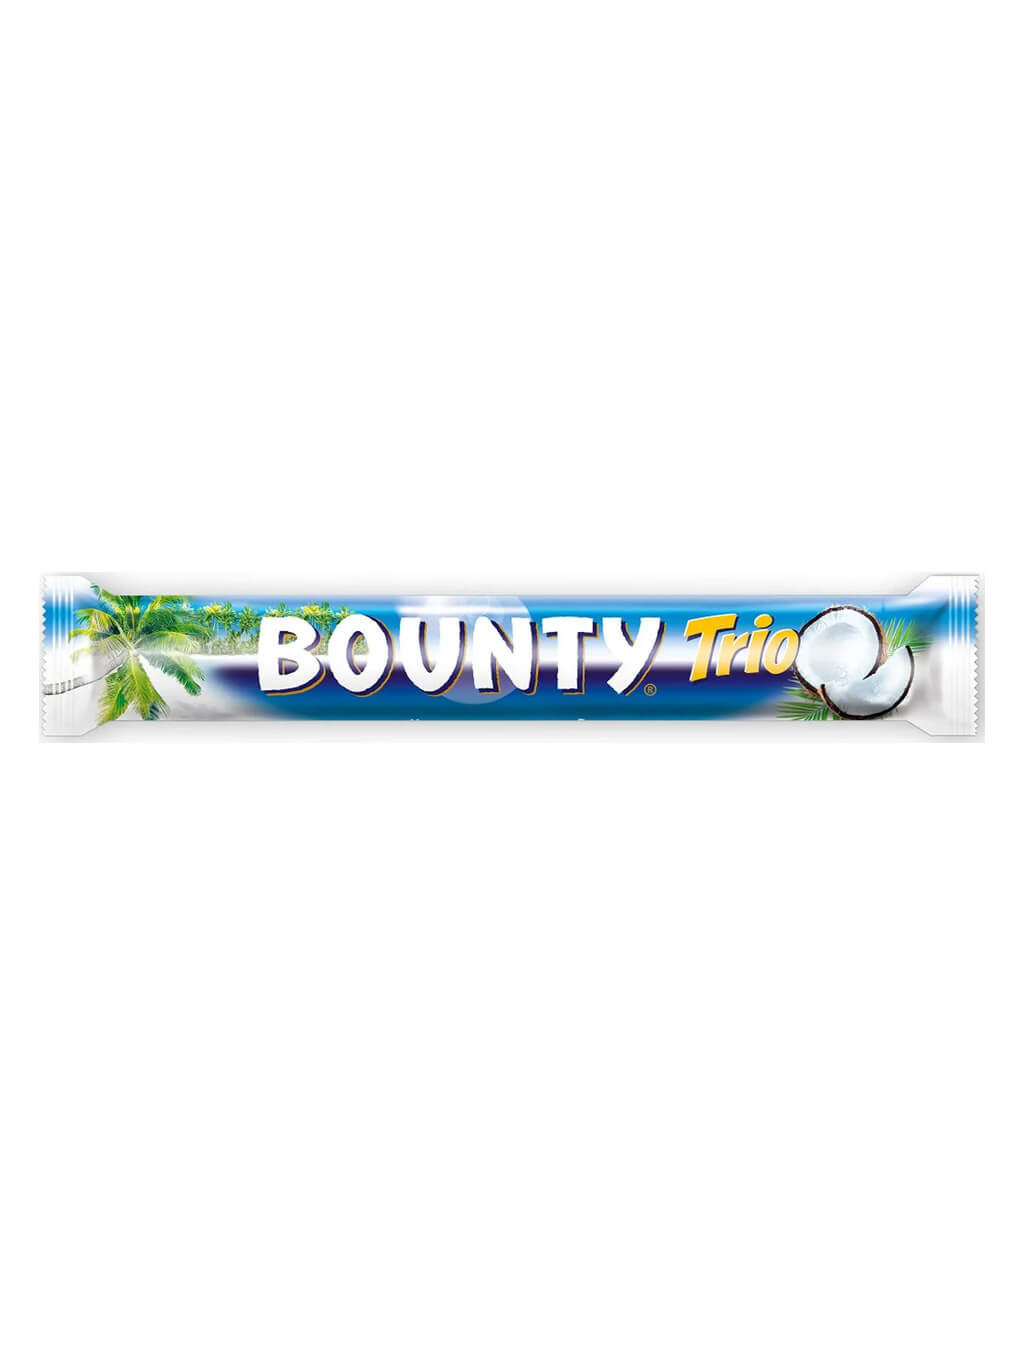 Bounty Trio Баунти Трио шоколадный батончик 82,5 гр купить оптом